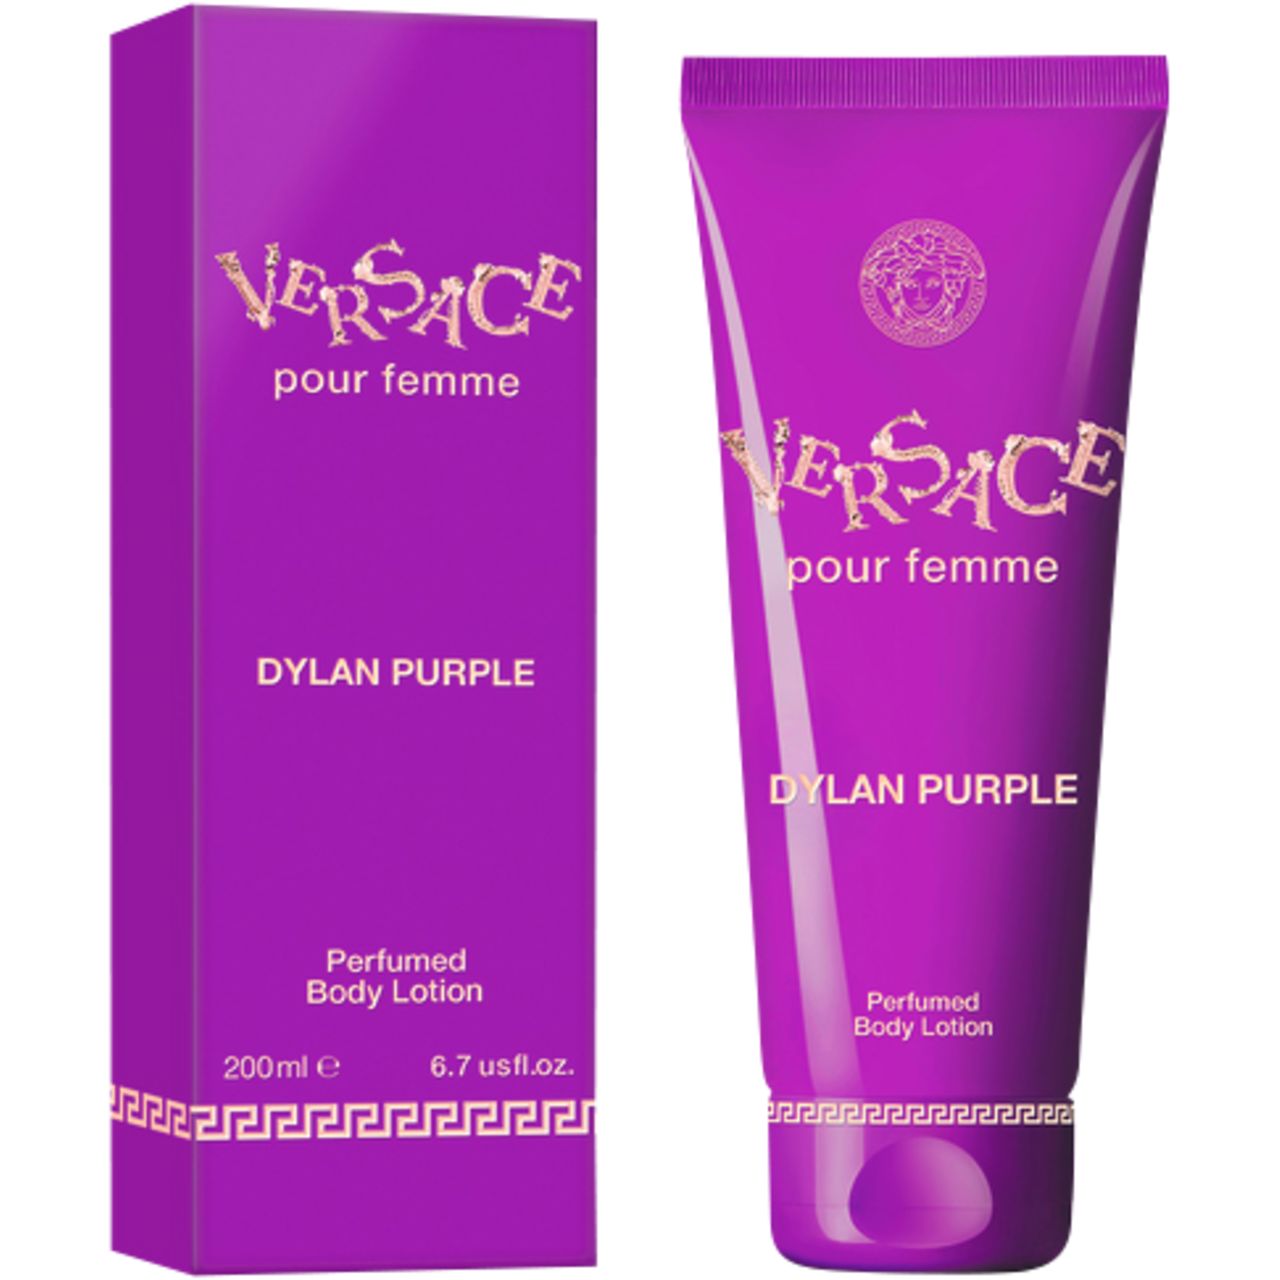 Versace Dylan Purple Bodylotion